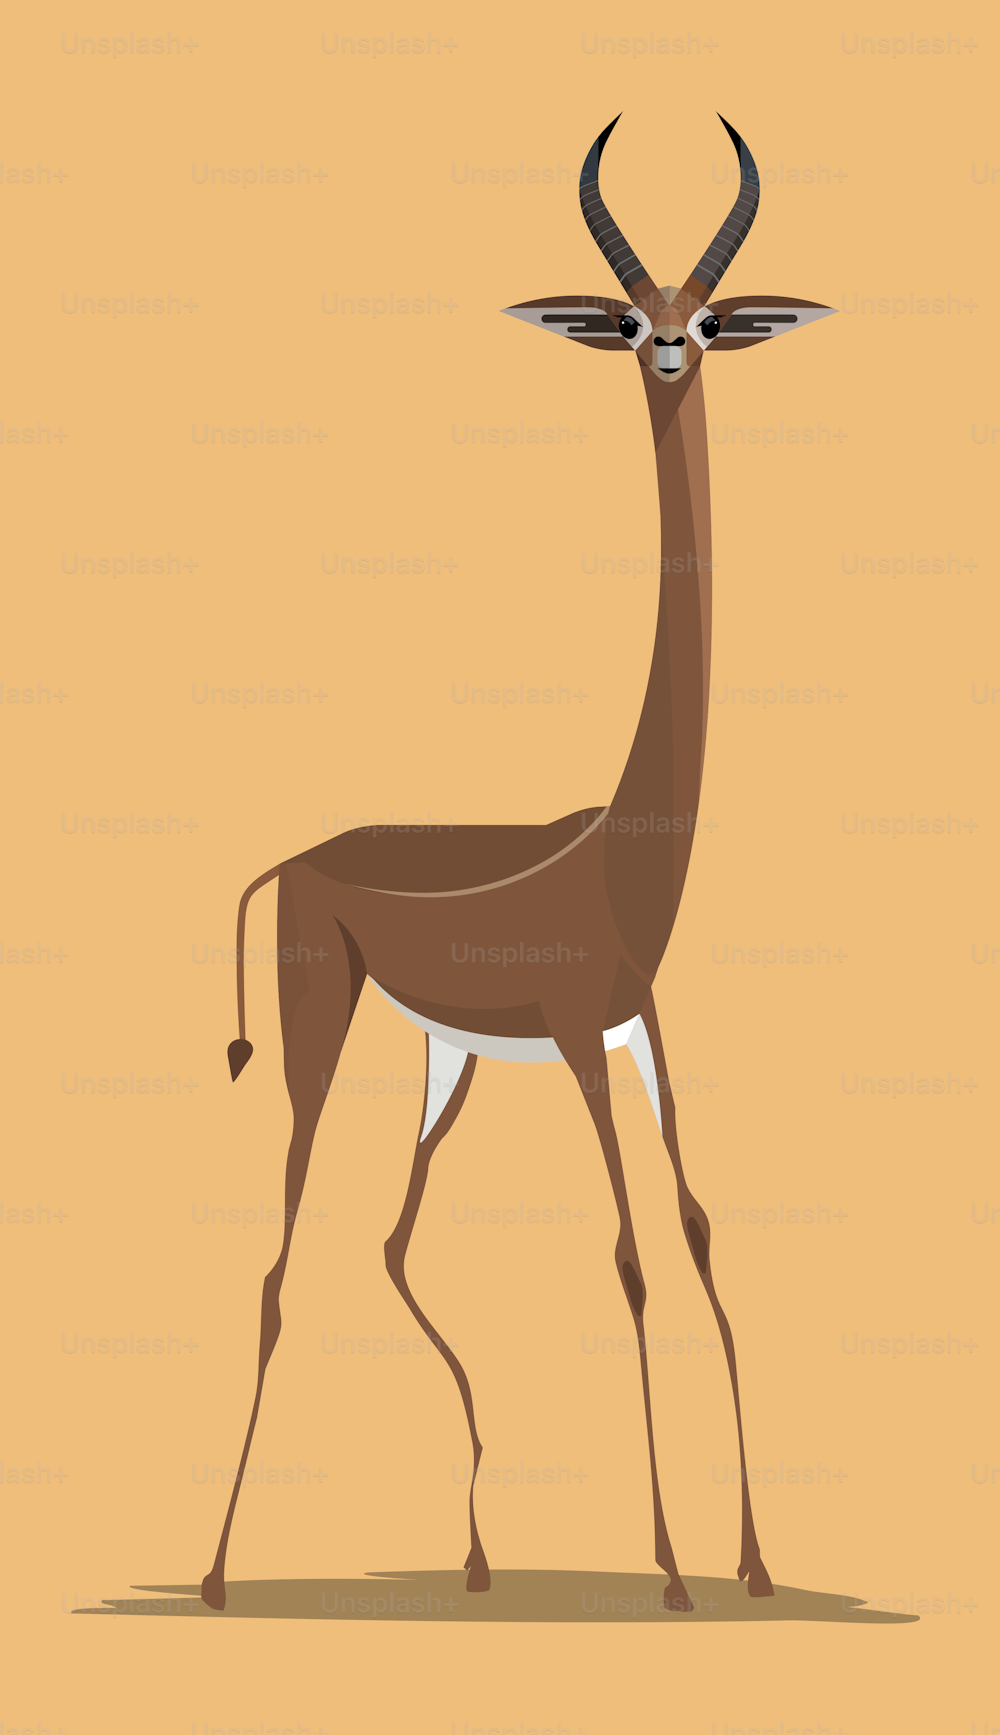 Graceful male gerenuk giraffe gazelle on orange background, stylized image, vector illustration